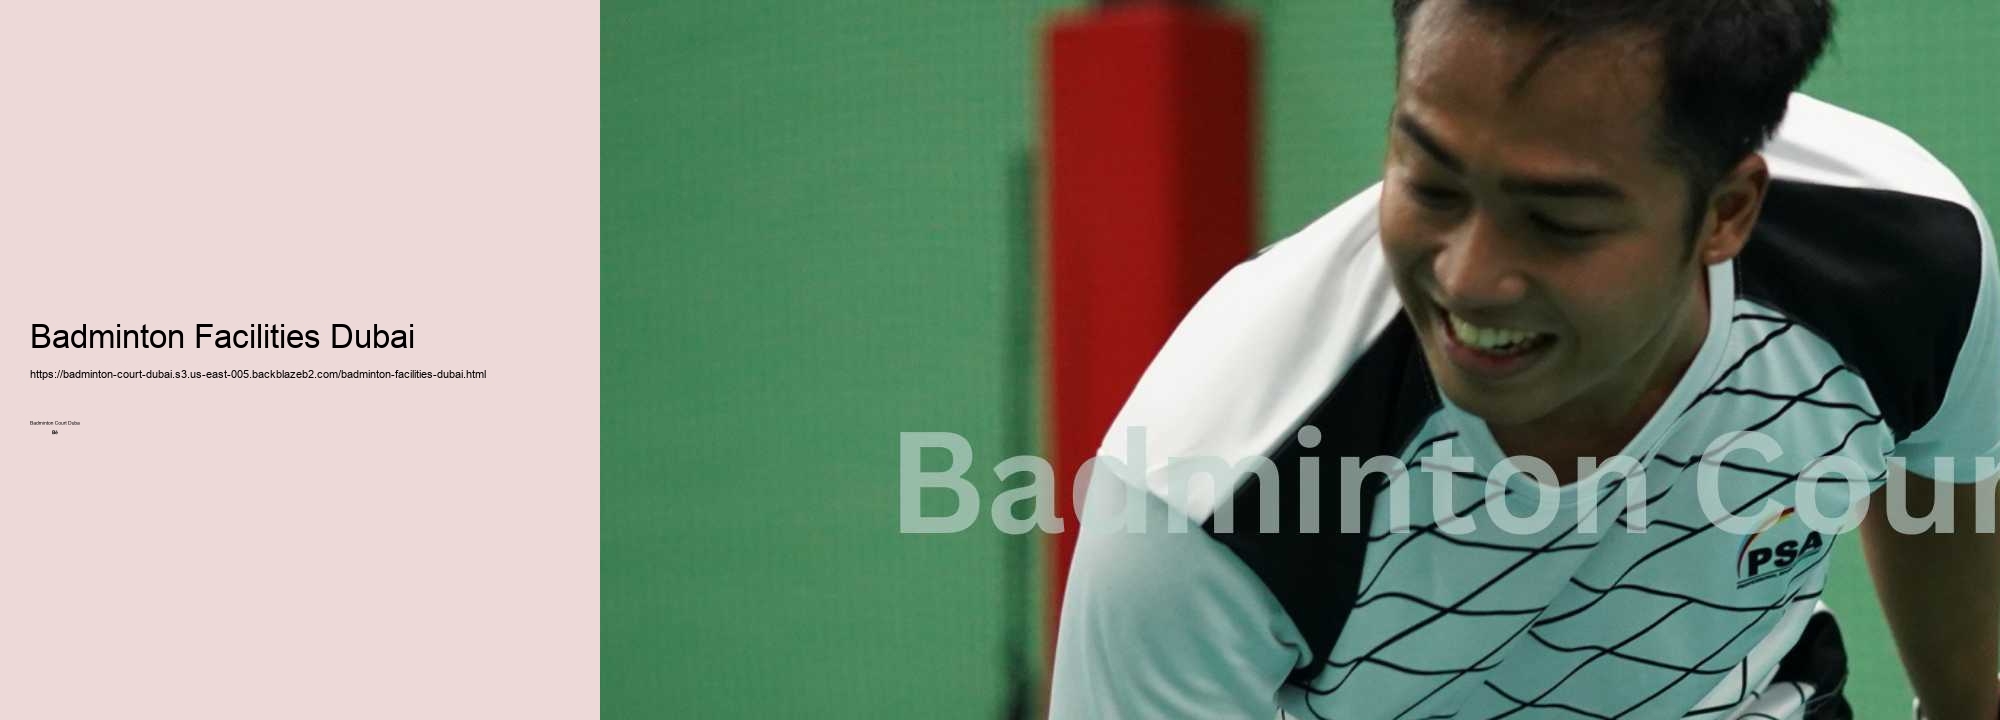 Badminton Facilities Dubai